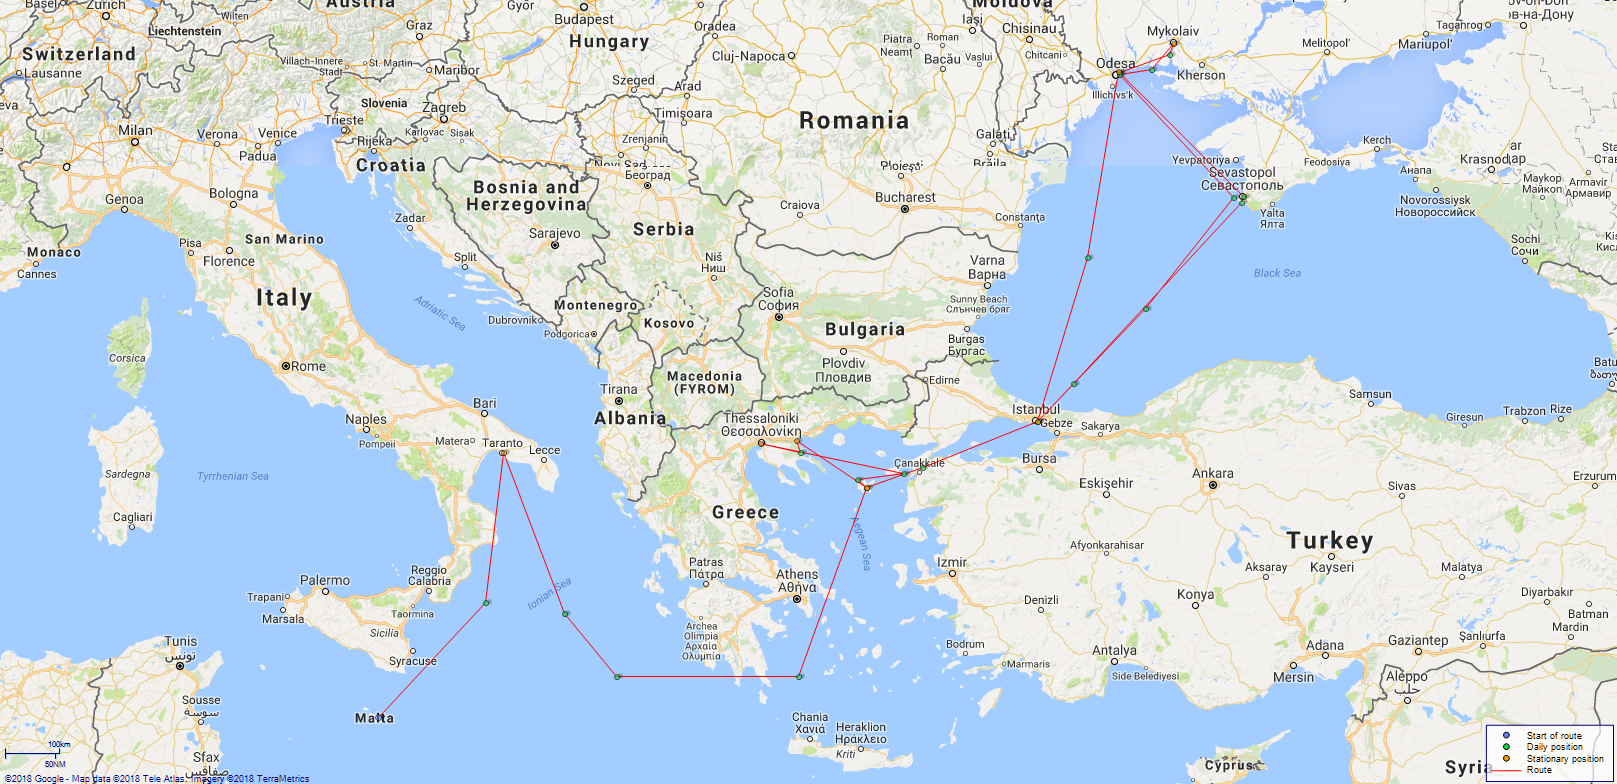 JP map Grafton Eastern Mediterranean and Black Sea